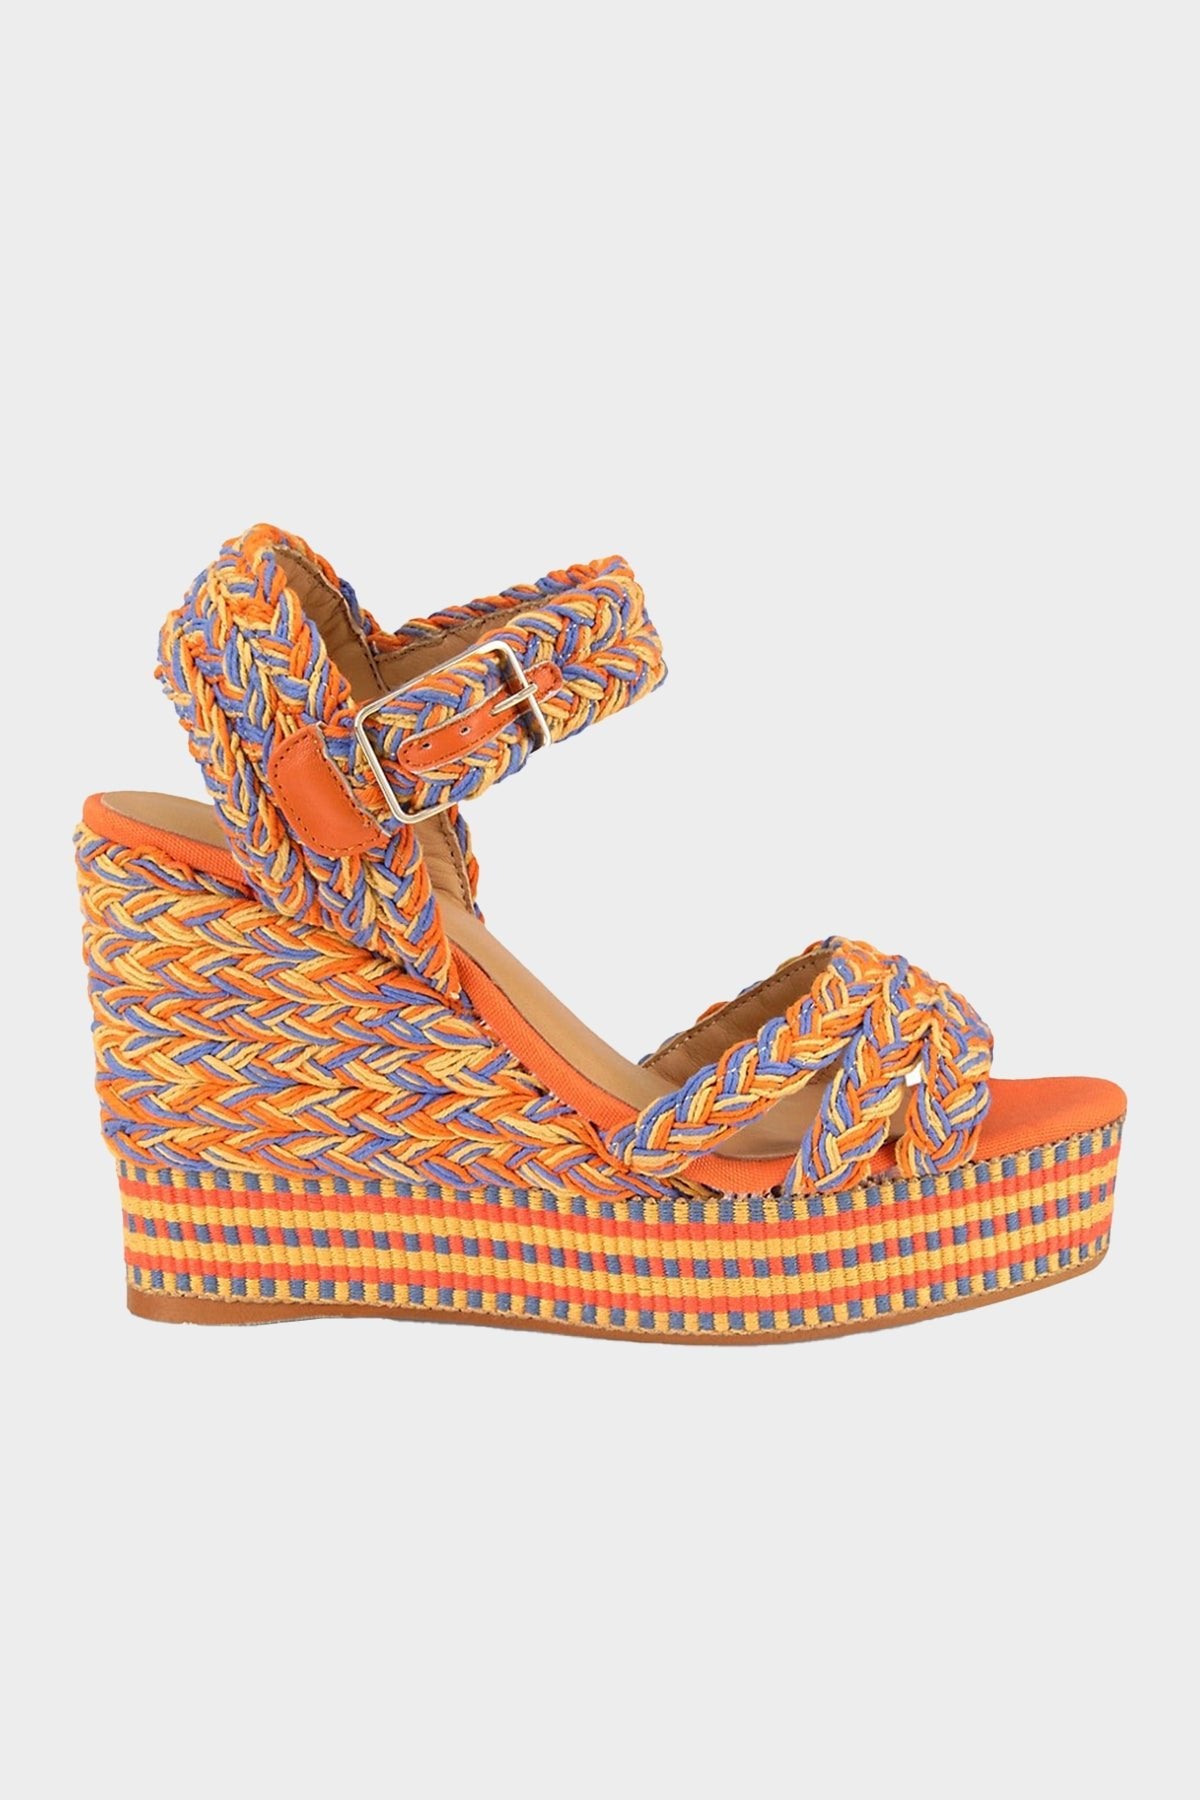 Fabi Platform Sandal in Naranja Multi - shop-olivia.com